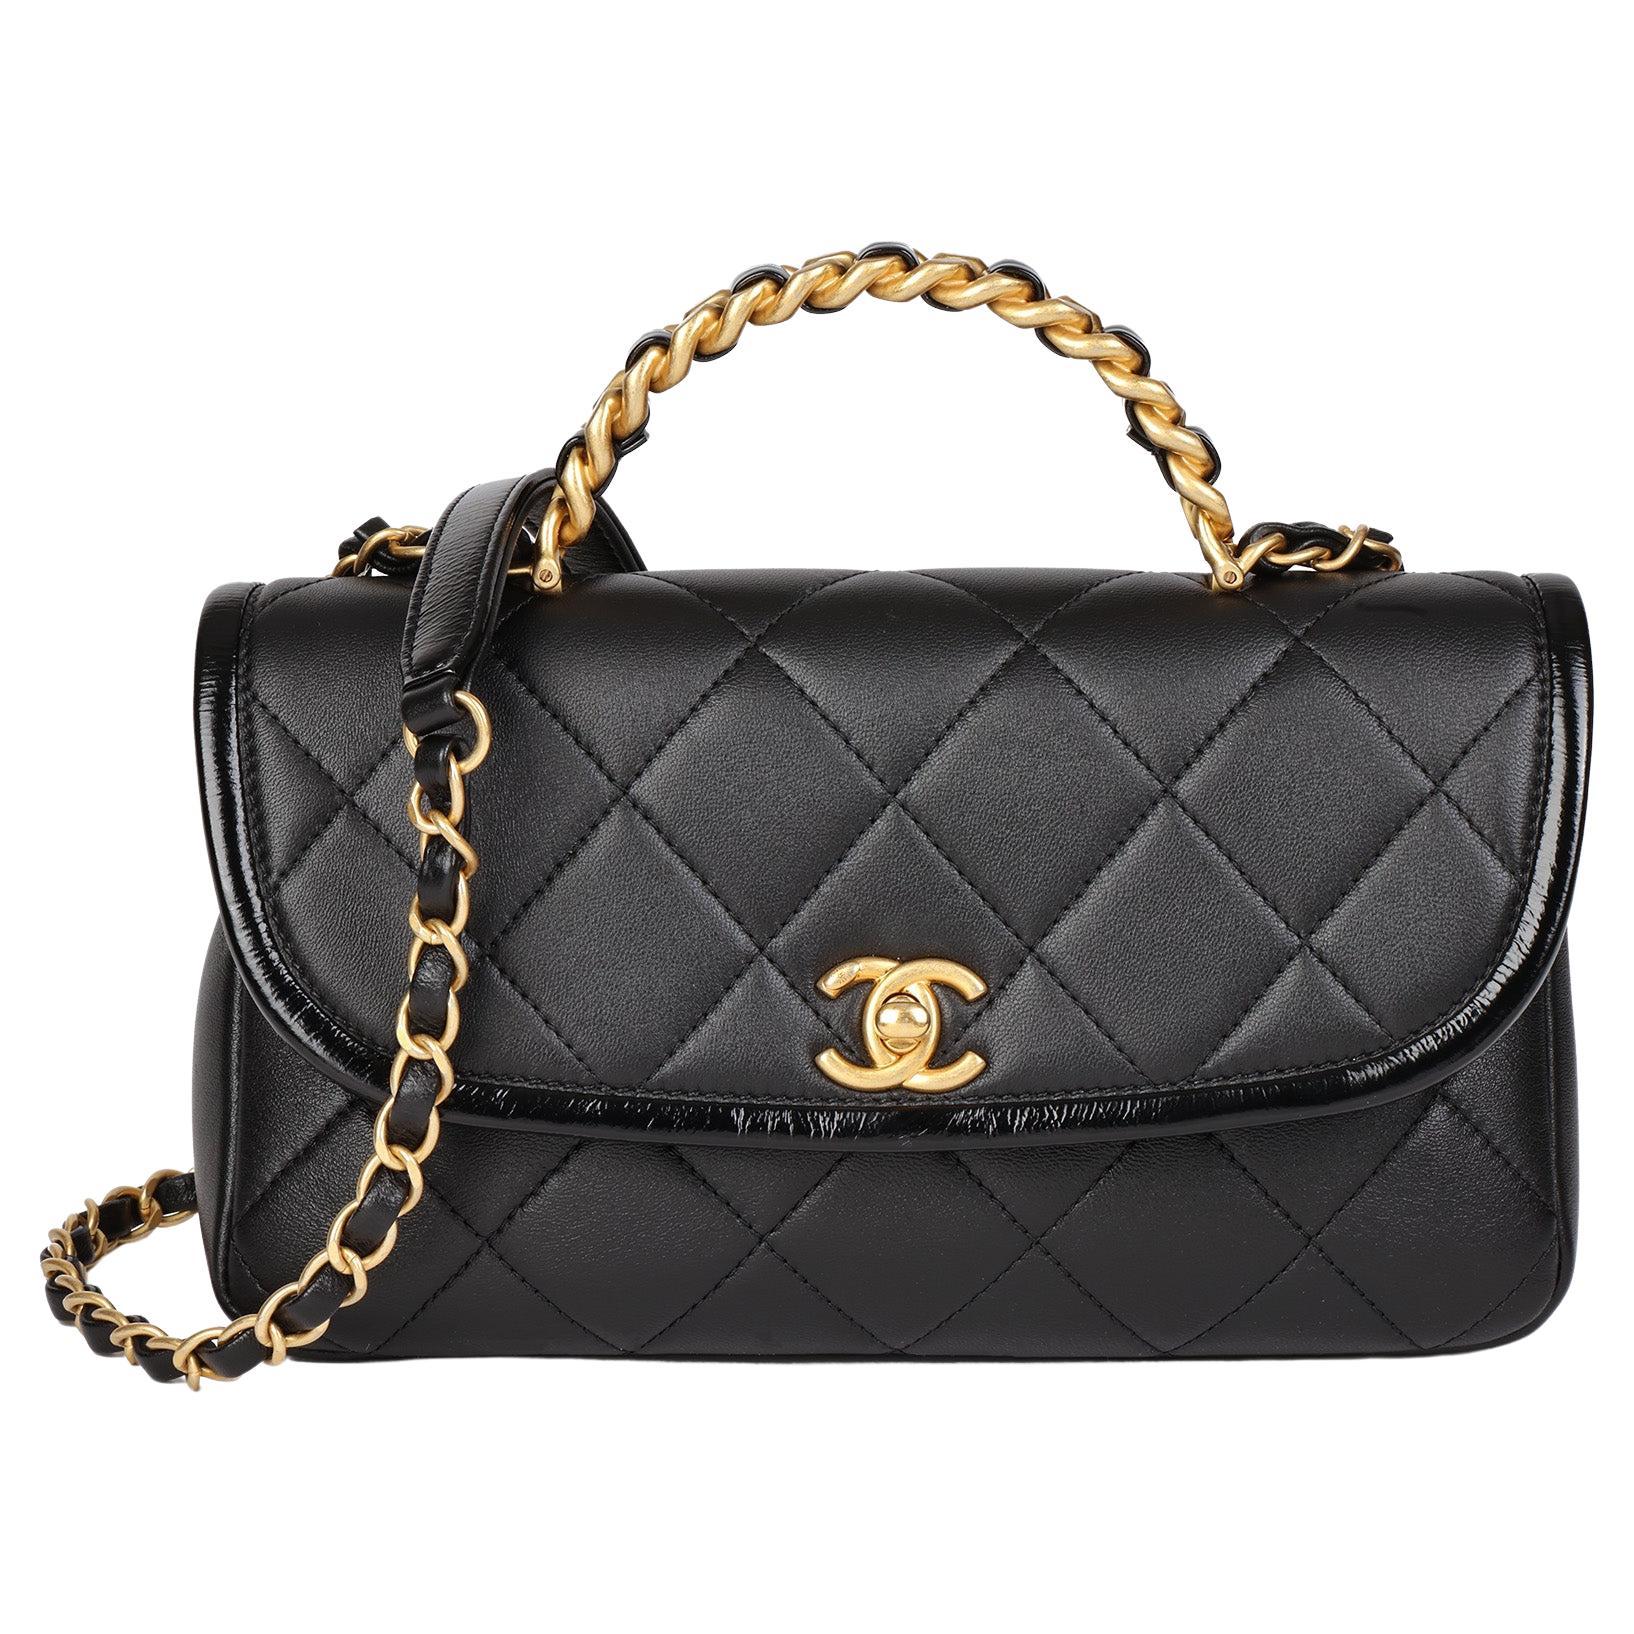 Chanel Handbag Pink Top Handle Tote Bag Antique Gold Hardware Caviar  Leather 201